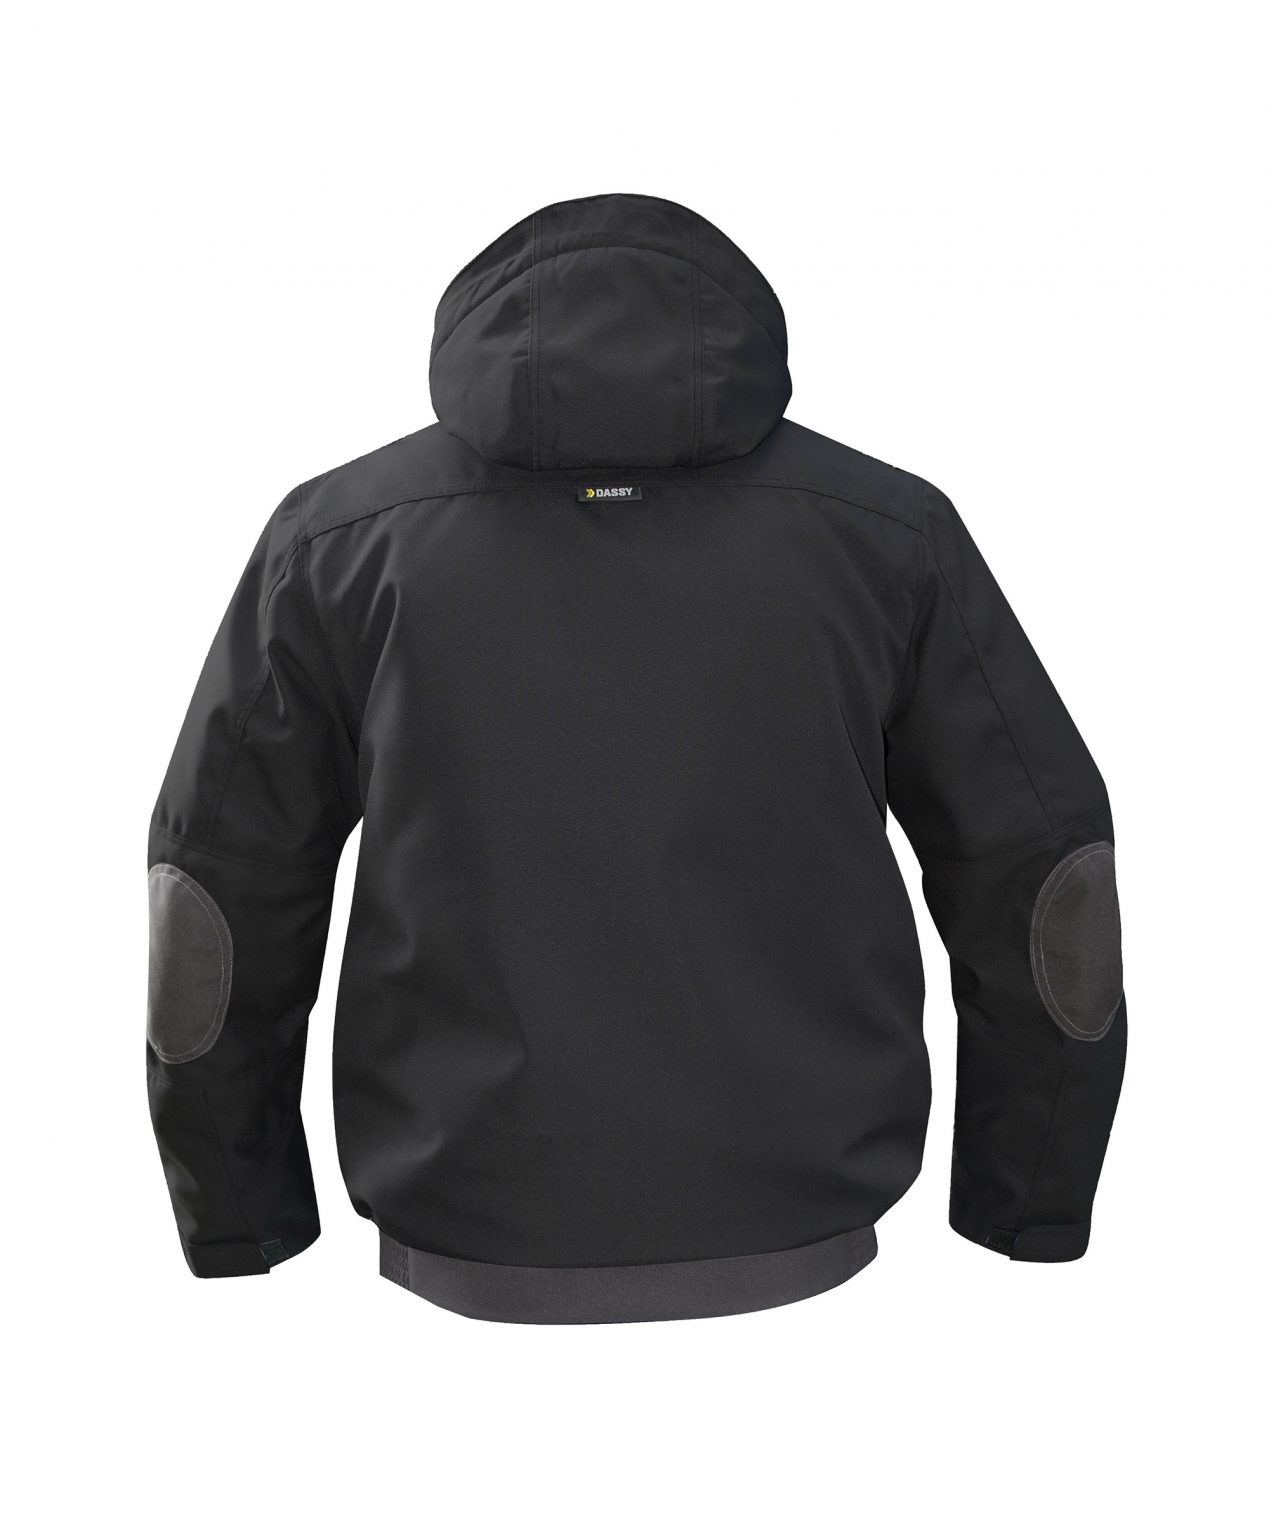 austin canvas winter jacket black anthracite grey back